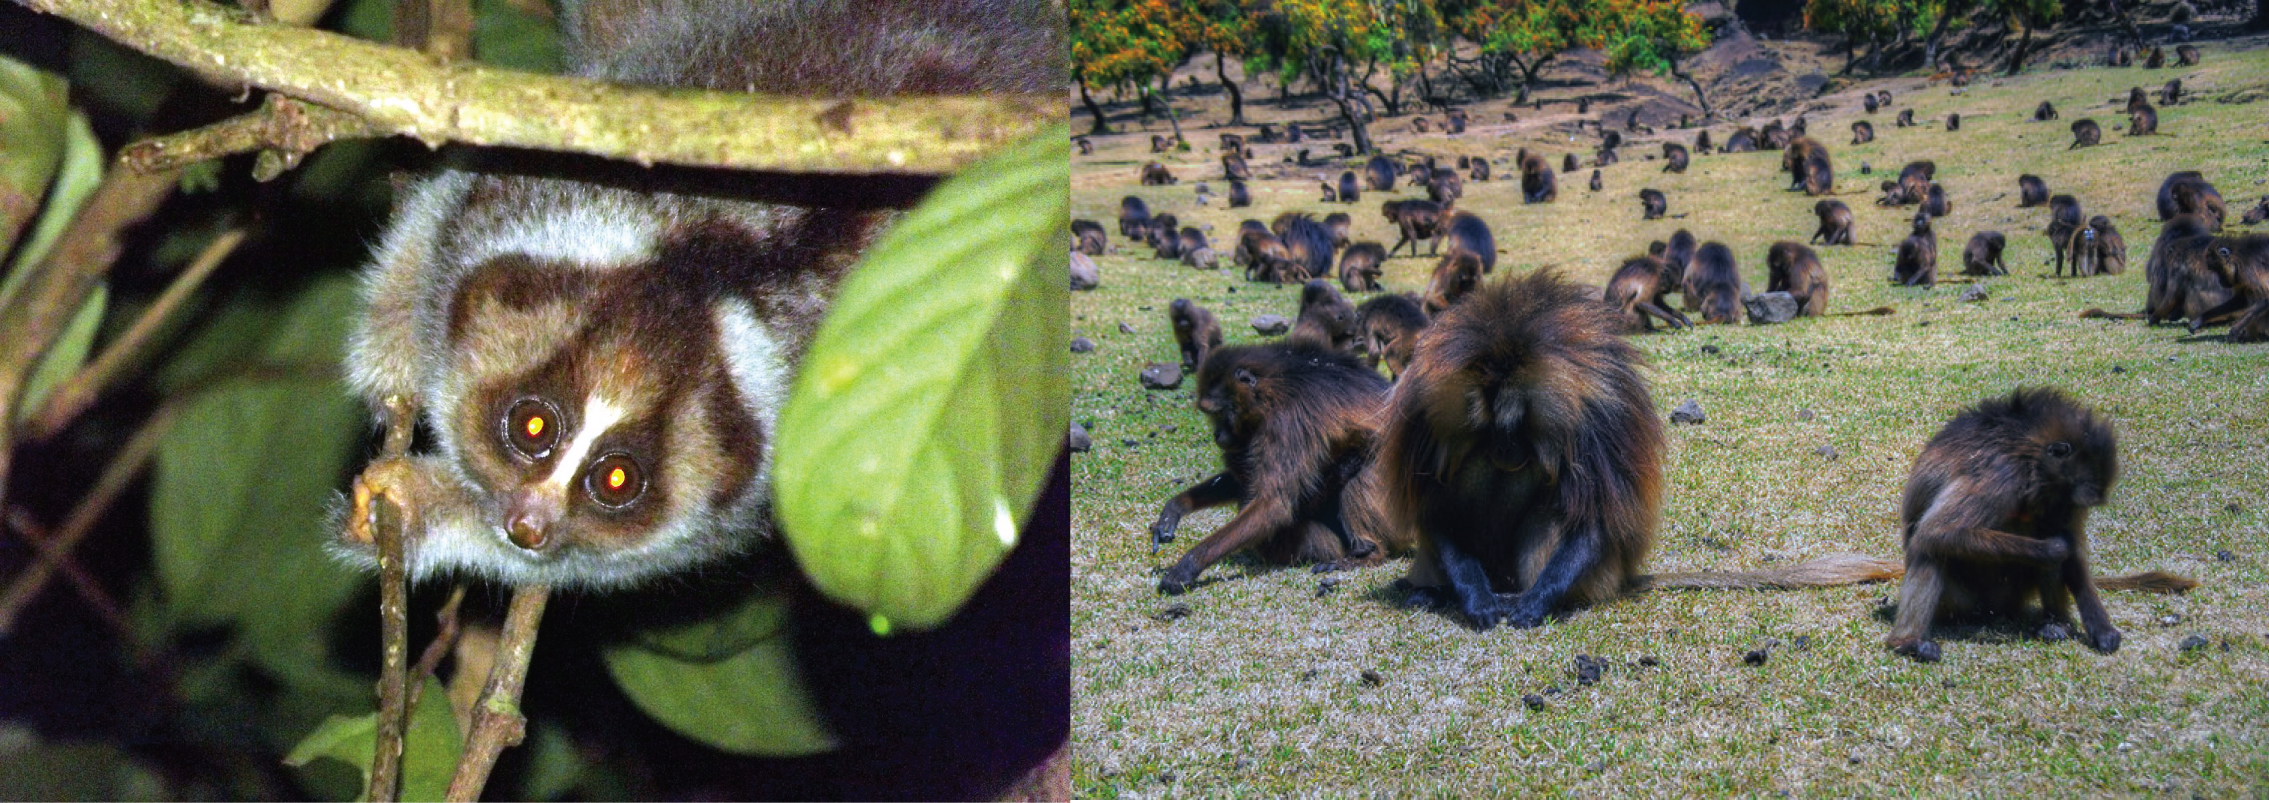 A slow loris. A group of gelada baboons.